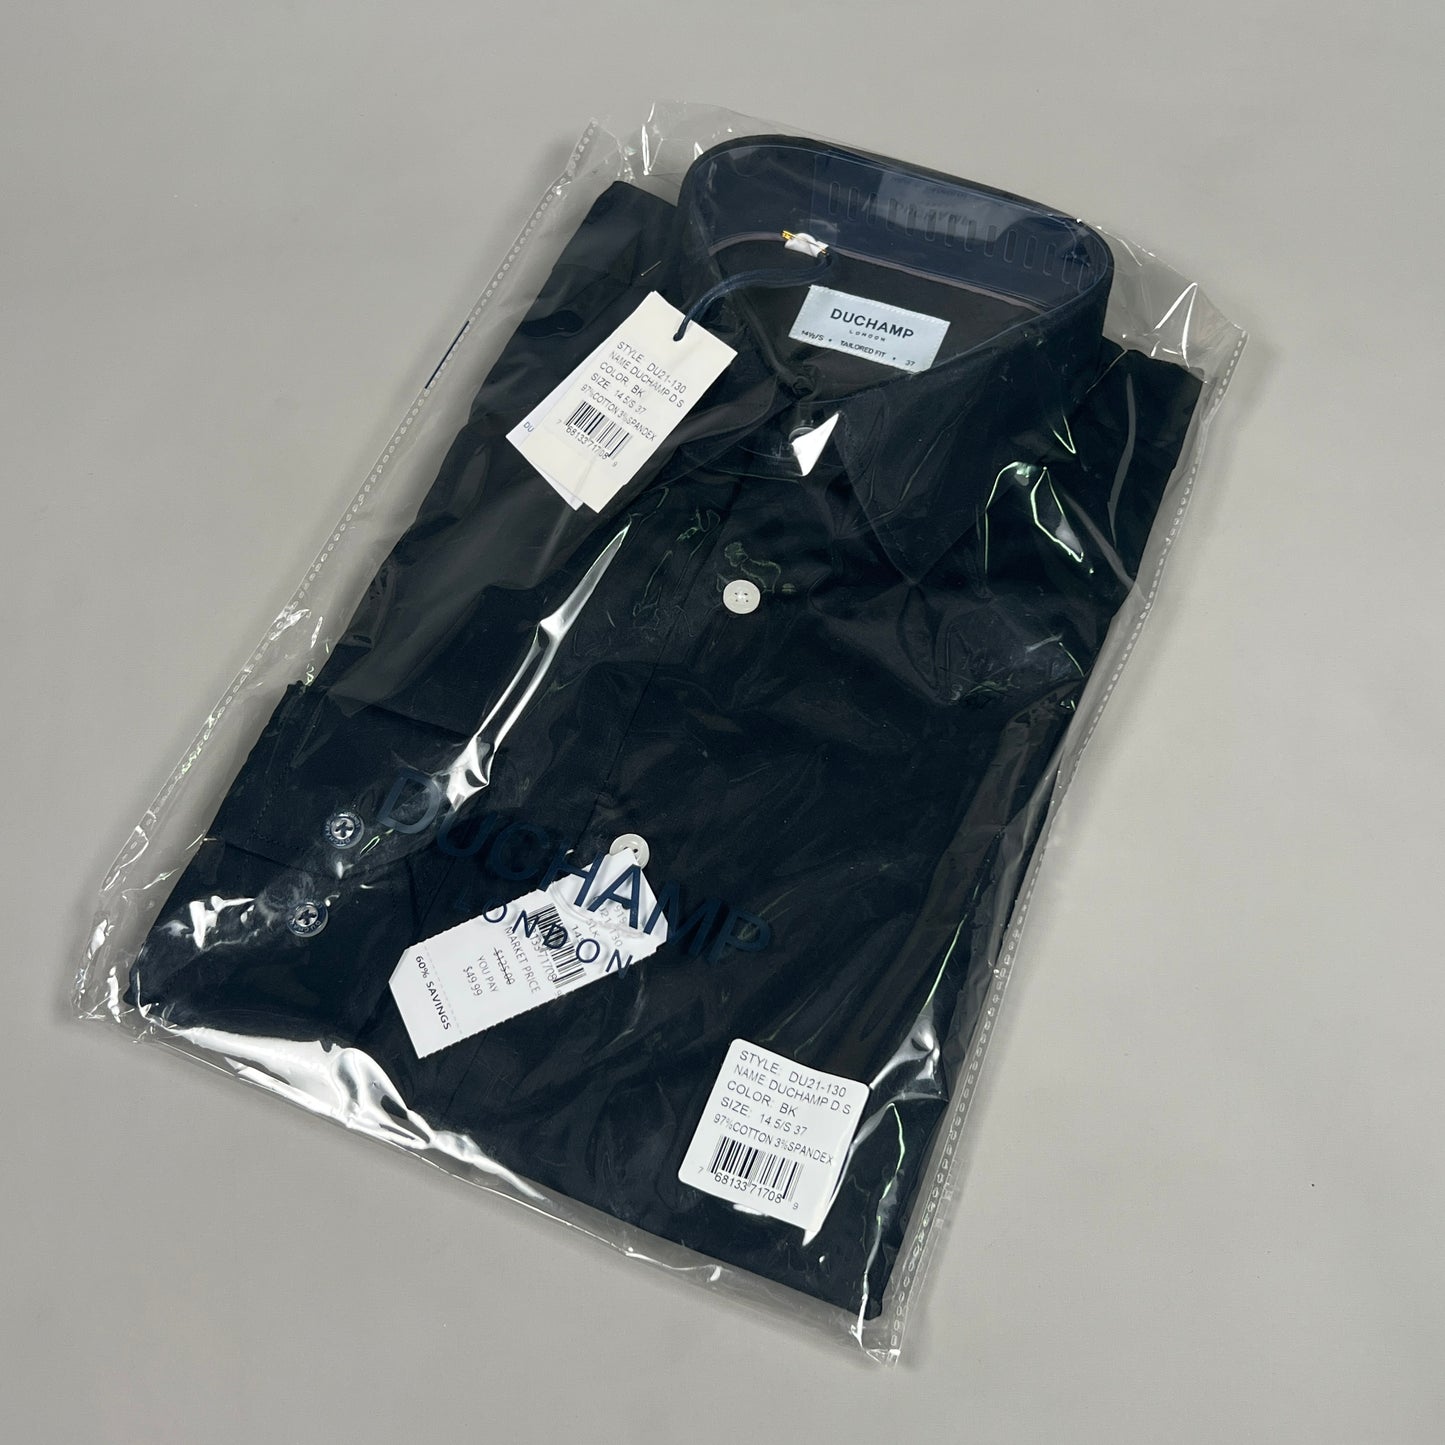 DUCHAMP LONDON Black Solid Tailored-fit Dress Shirt Men's Sz S / 37 / 14.5 (New)